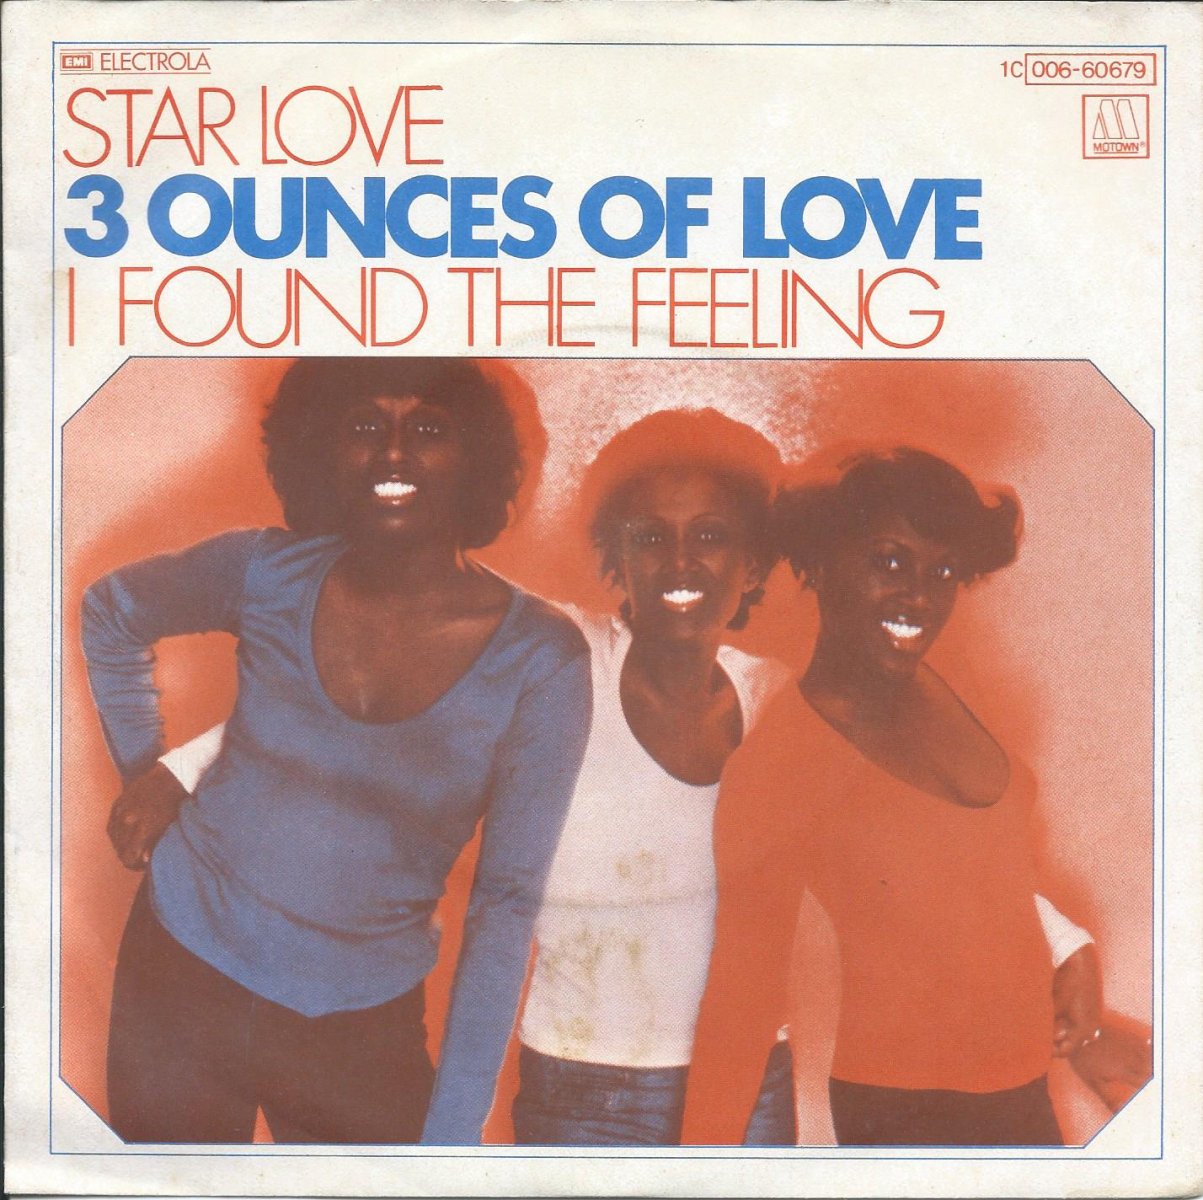 3 OUNCES OF LOVE / STAR LOVE / I FOUND FEELING (7